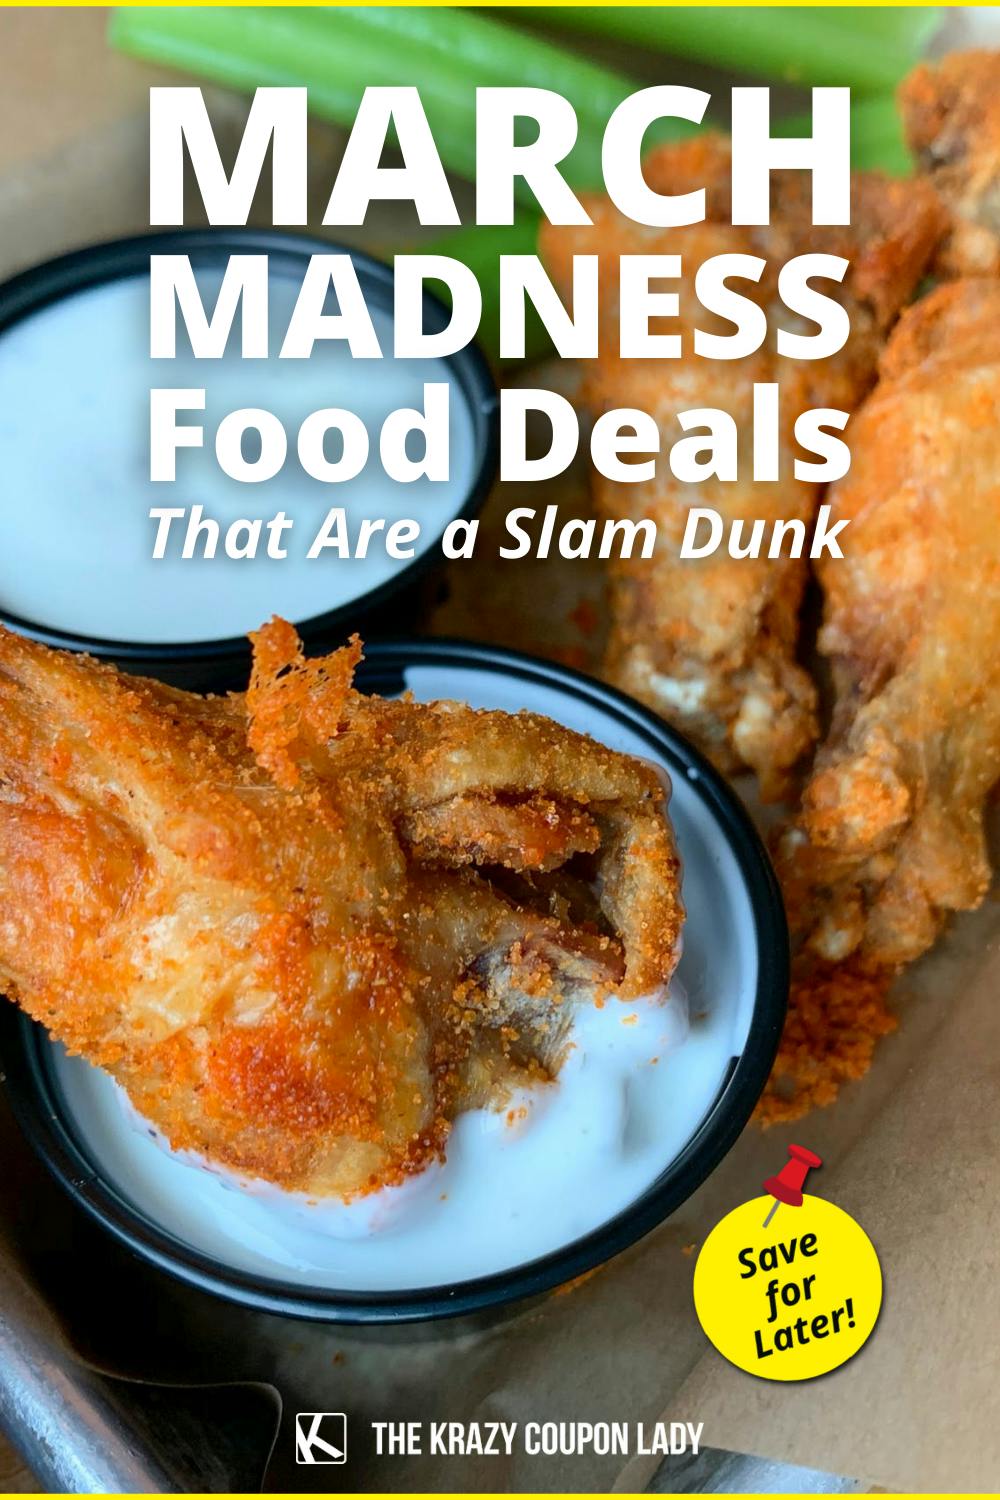 13 March Madness Food Deals — BOGO 50% Off Subway & More